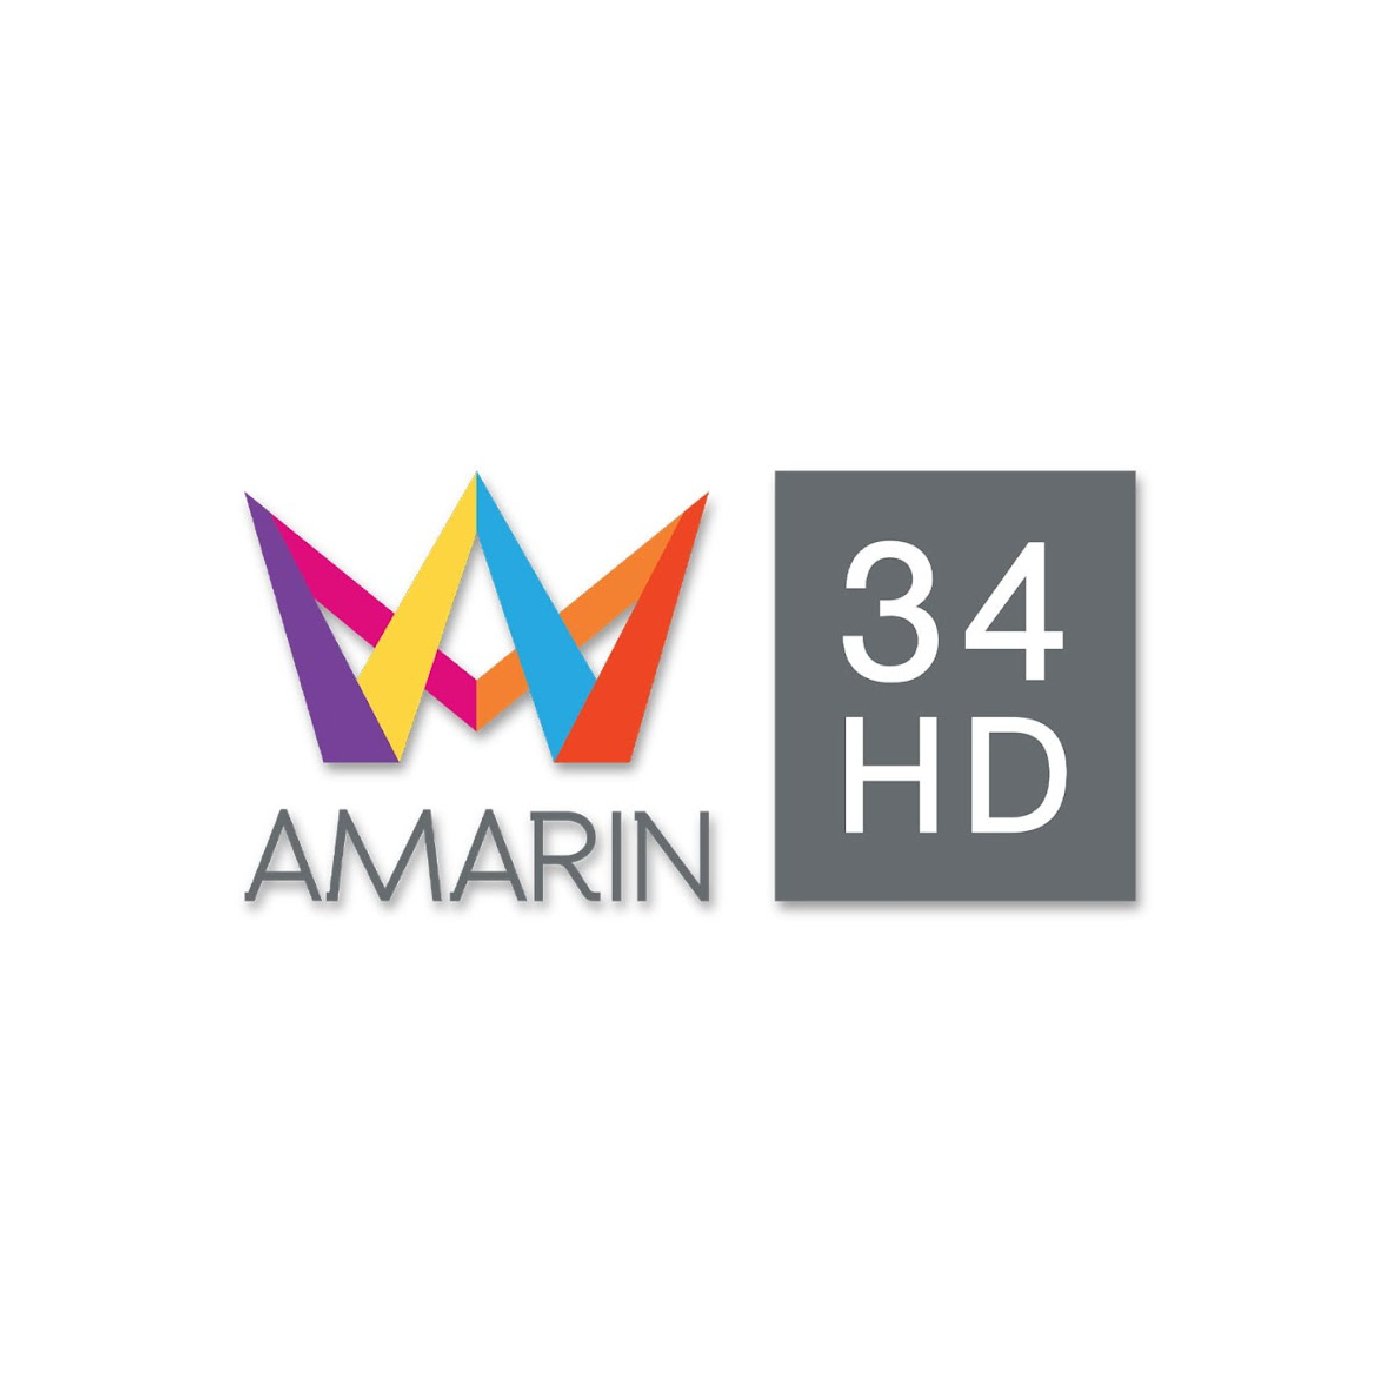 AmarinTV